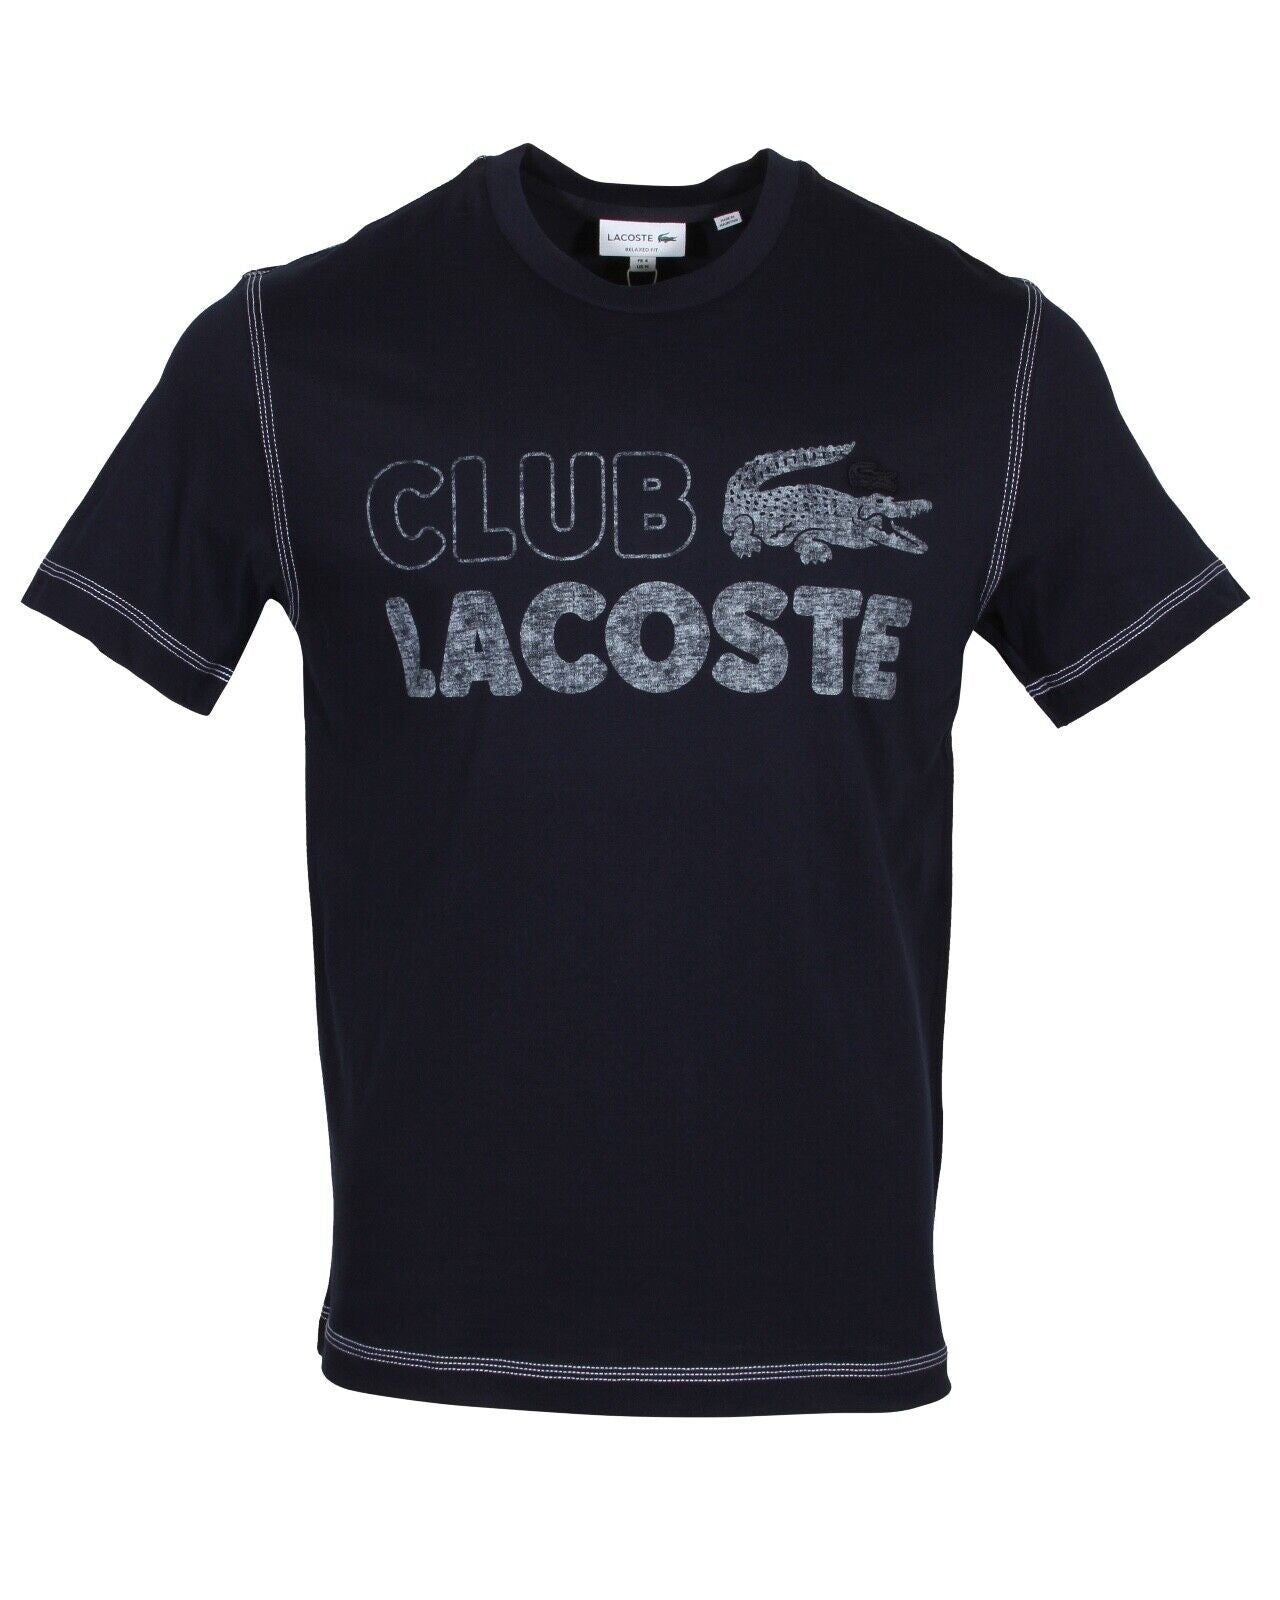 Lacoste Men’s Vintage Print Organic Cotton T-Shirt in Navy Blue TH5440-51 166